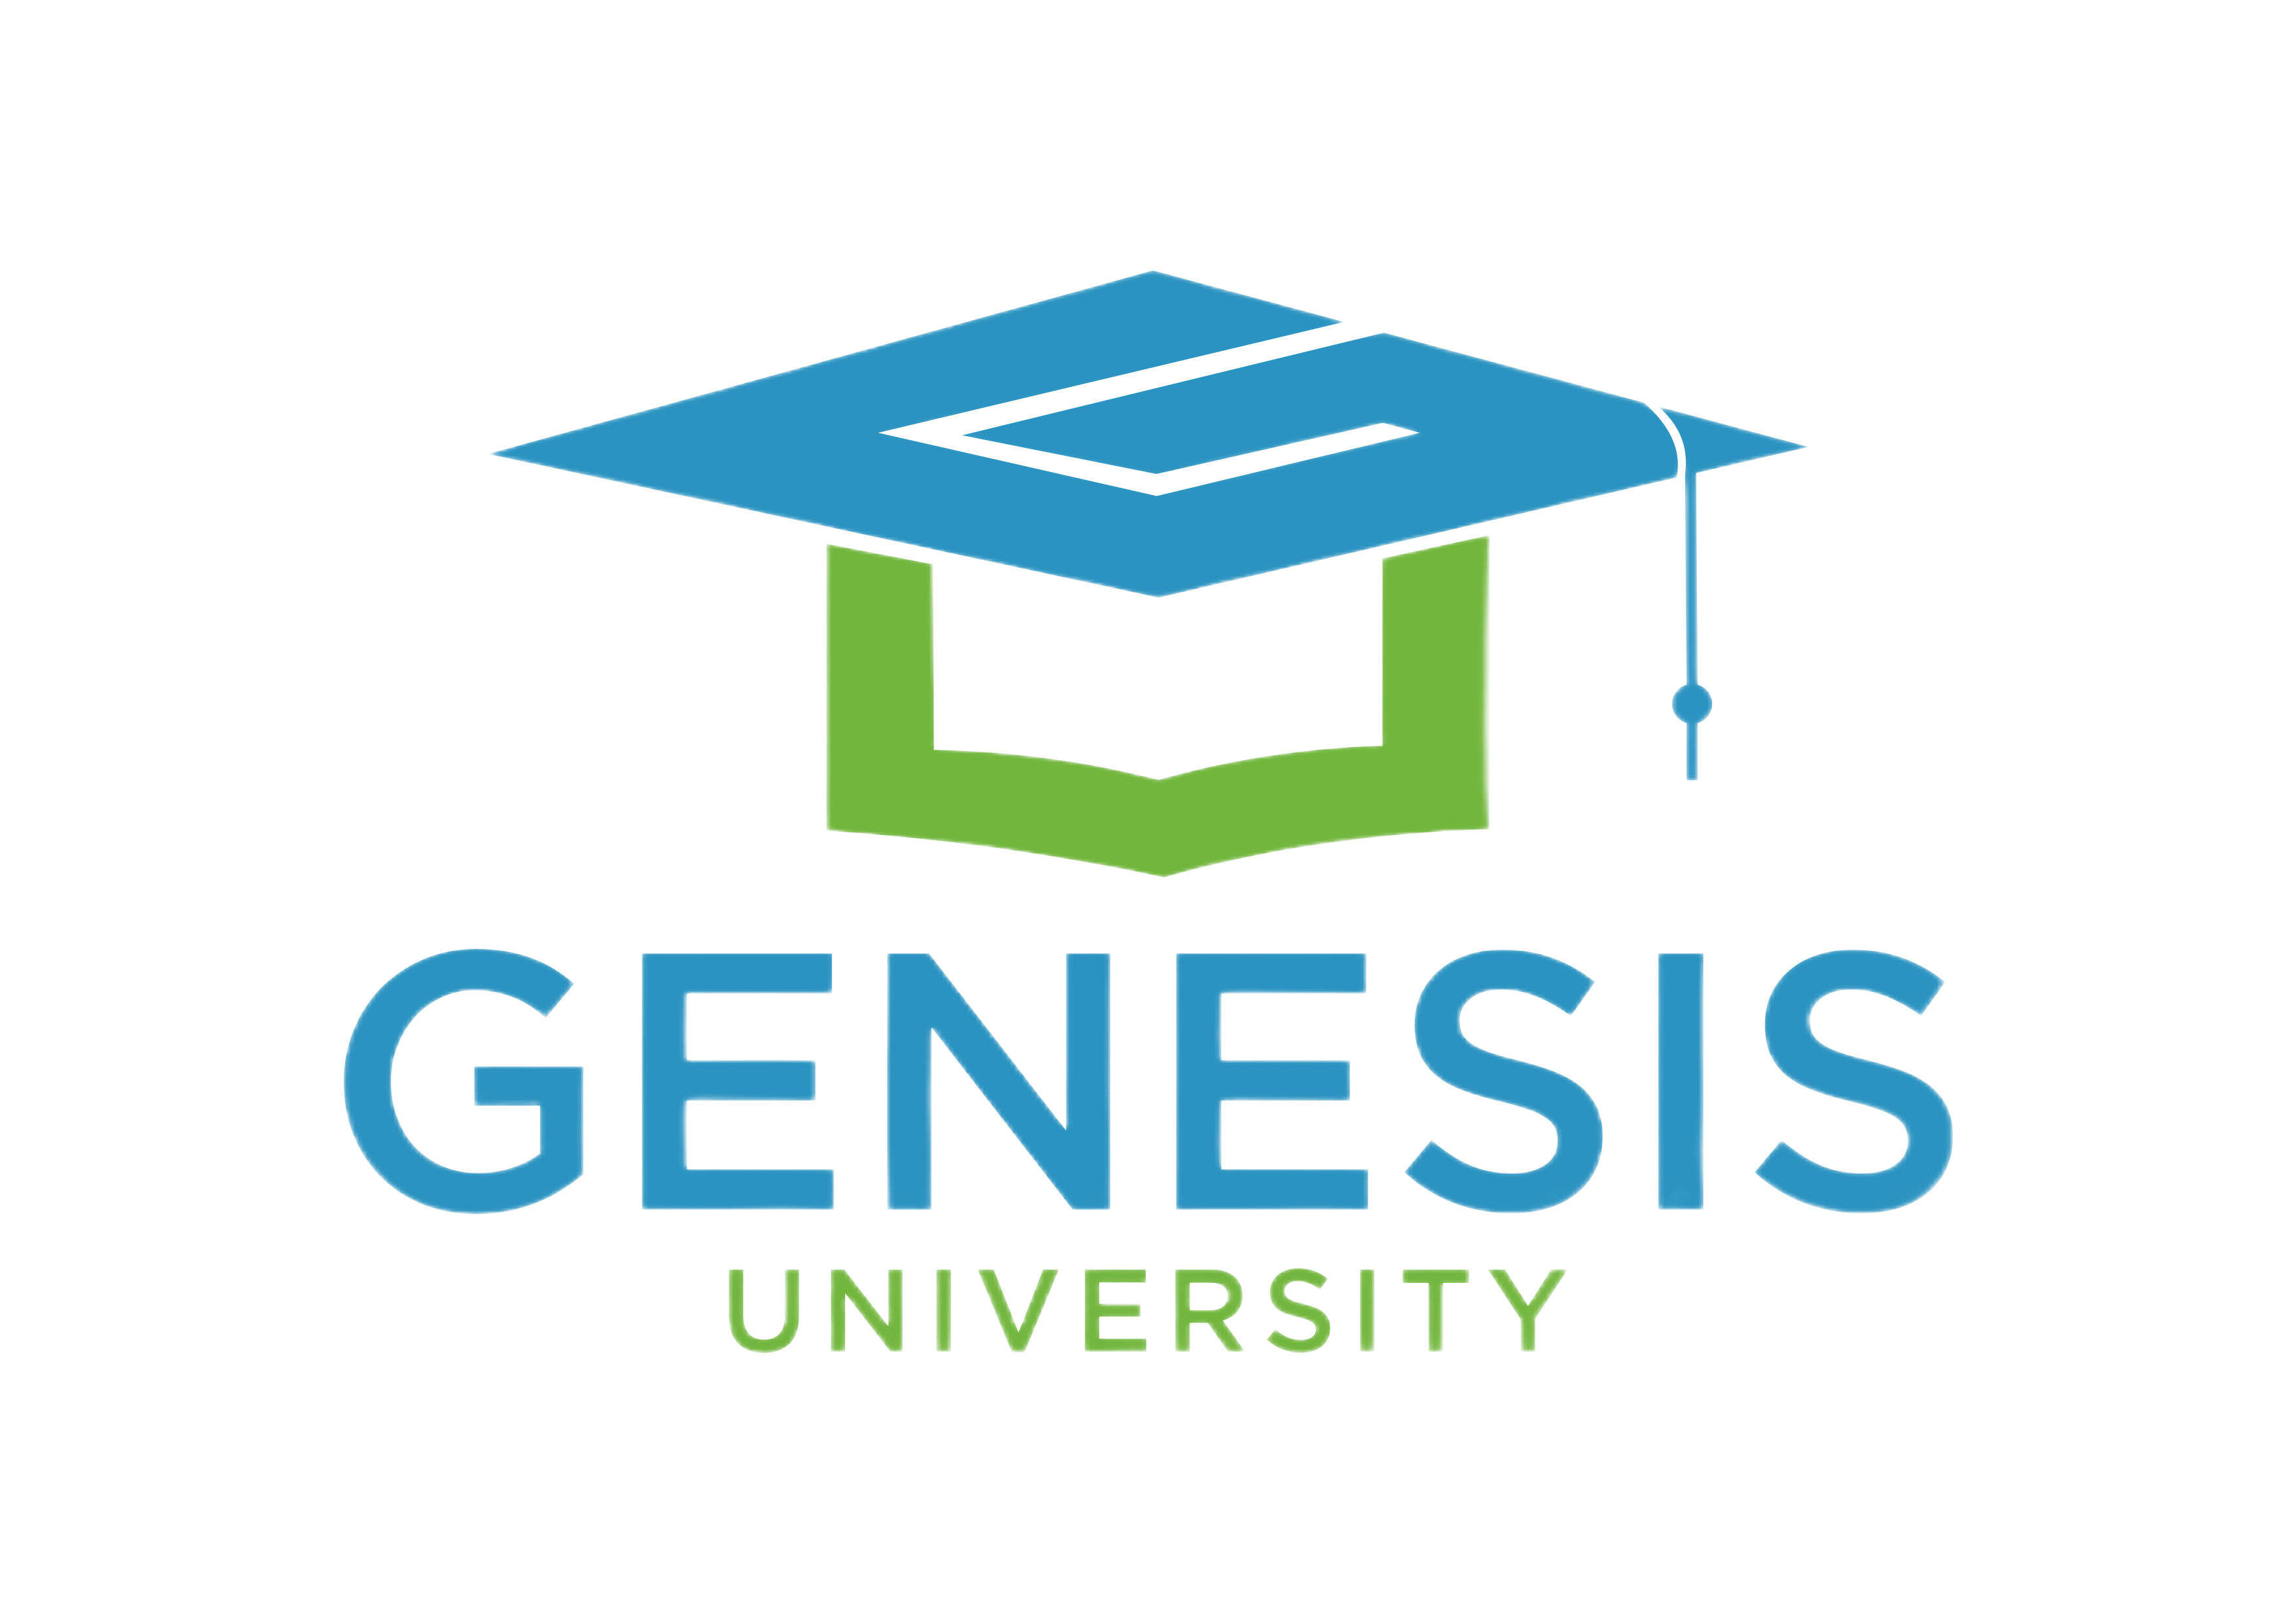 Genesis University